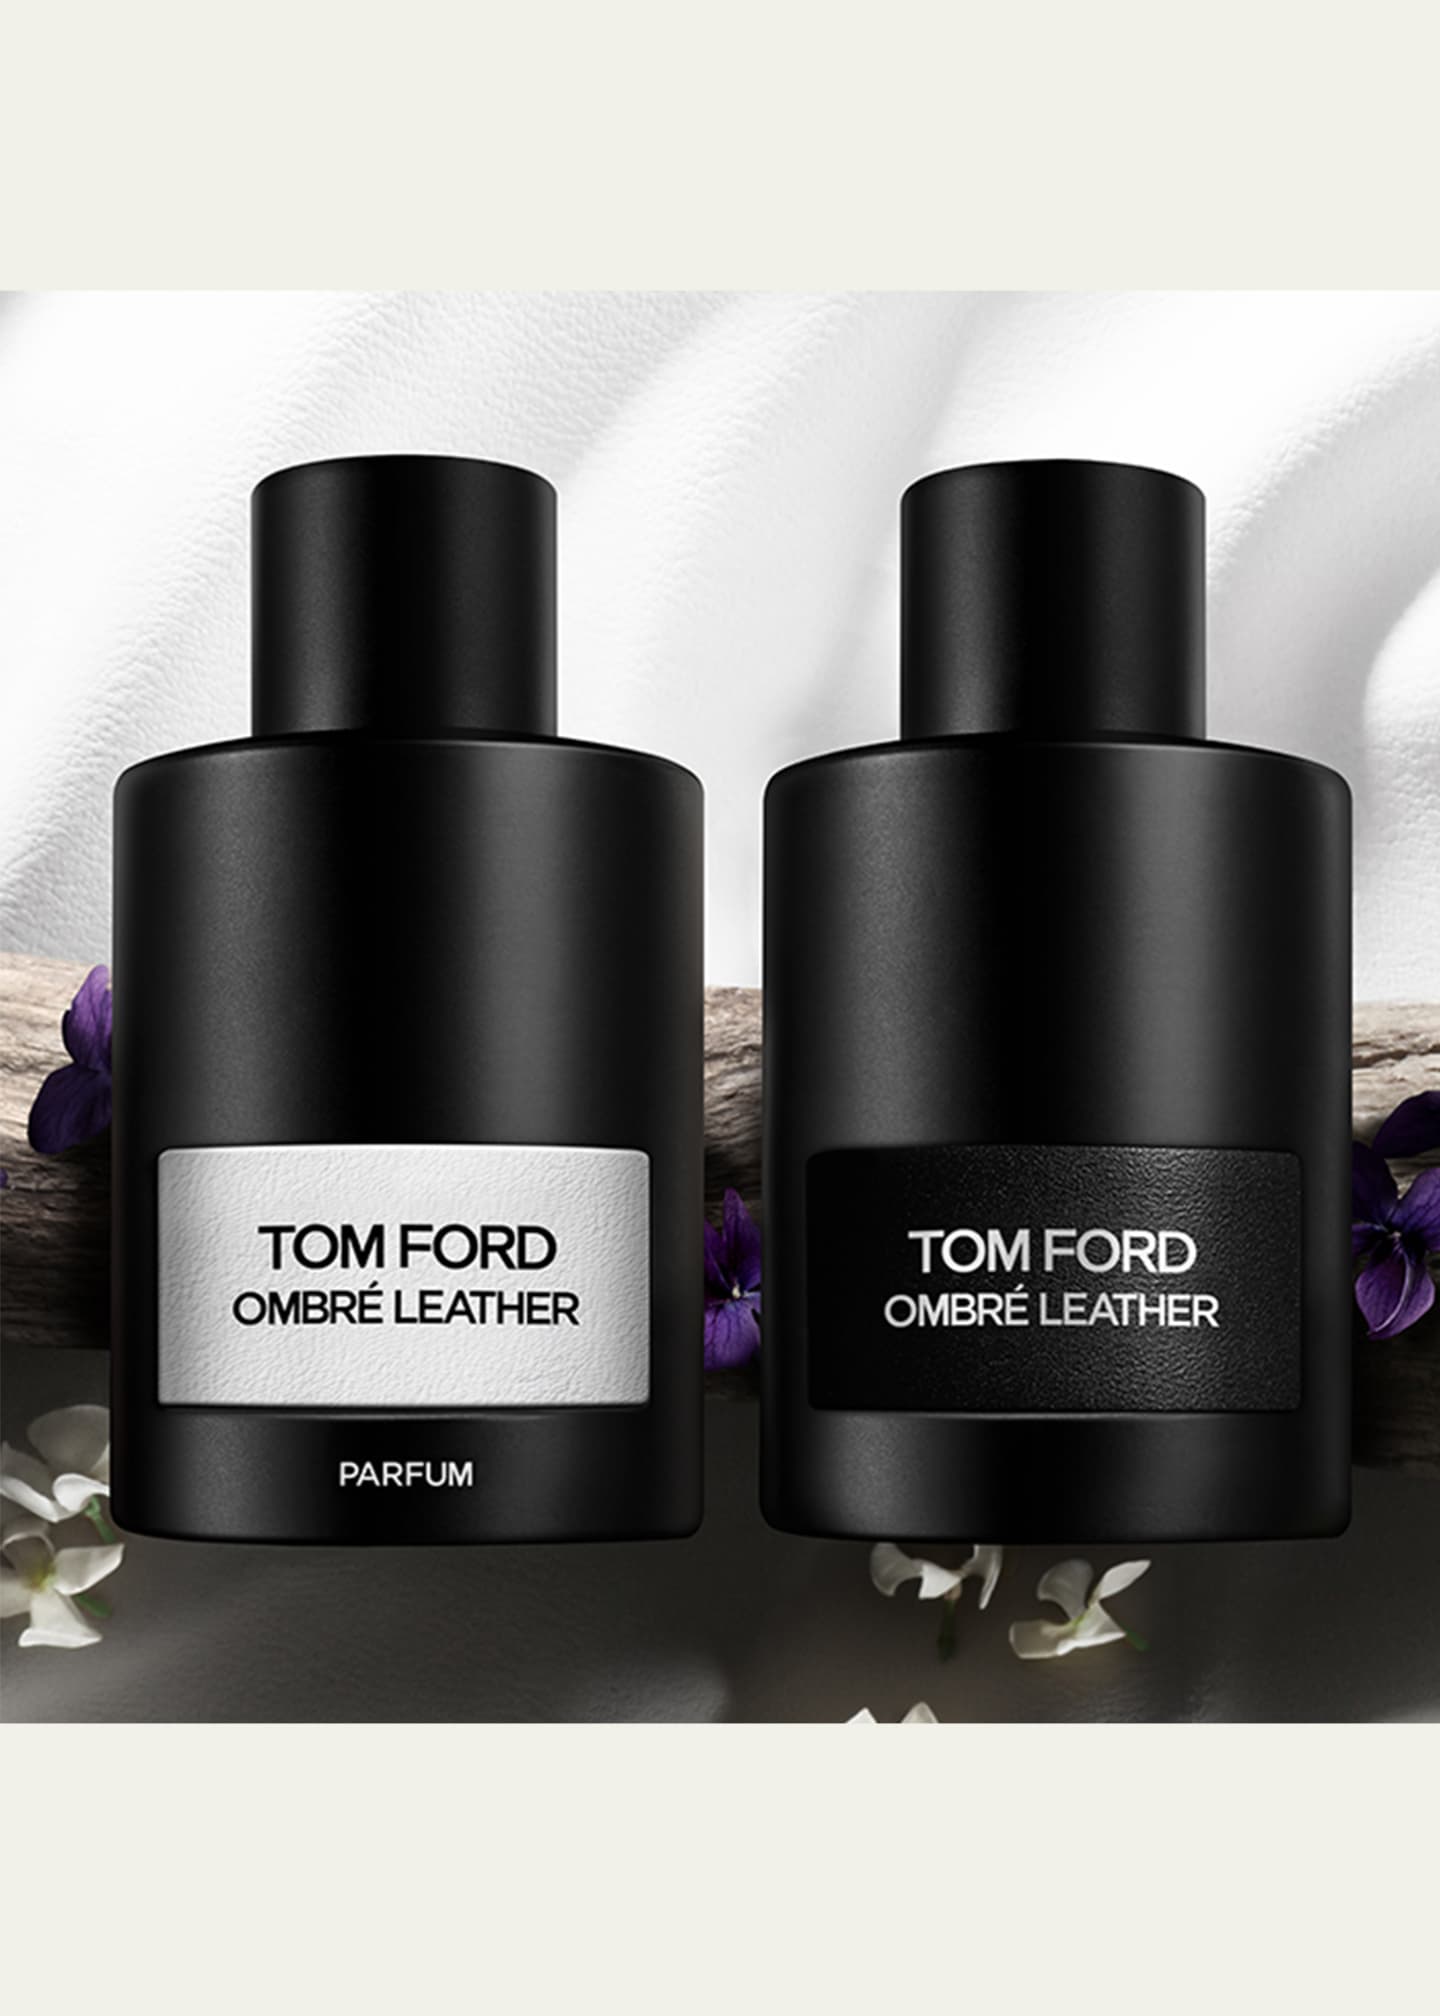 TOM FORD Ombre Leather Eau de Parfum, 1.7 oz. - Bergdorf Goodman